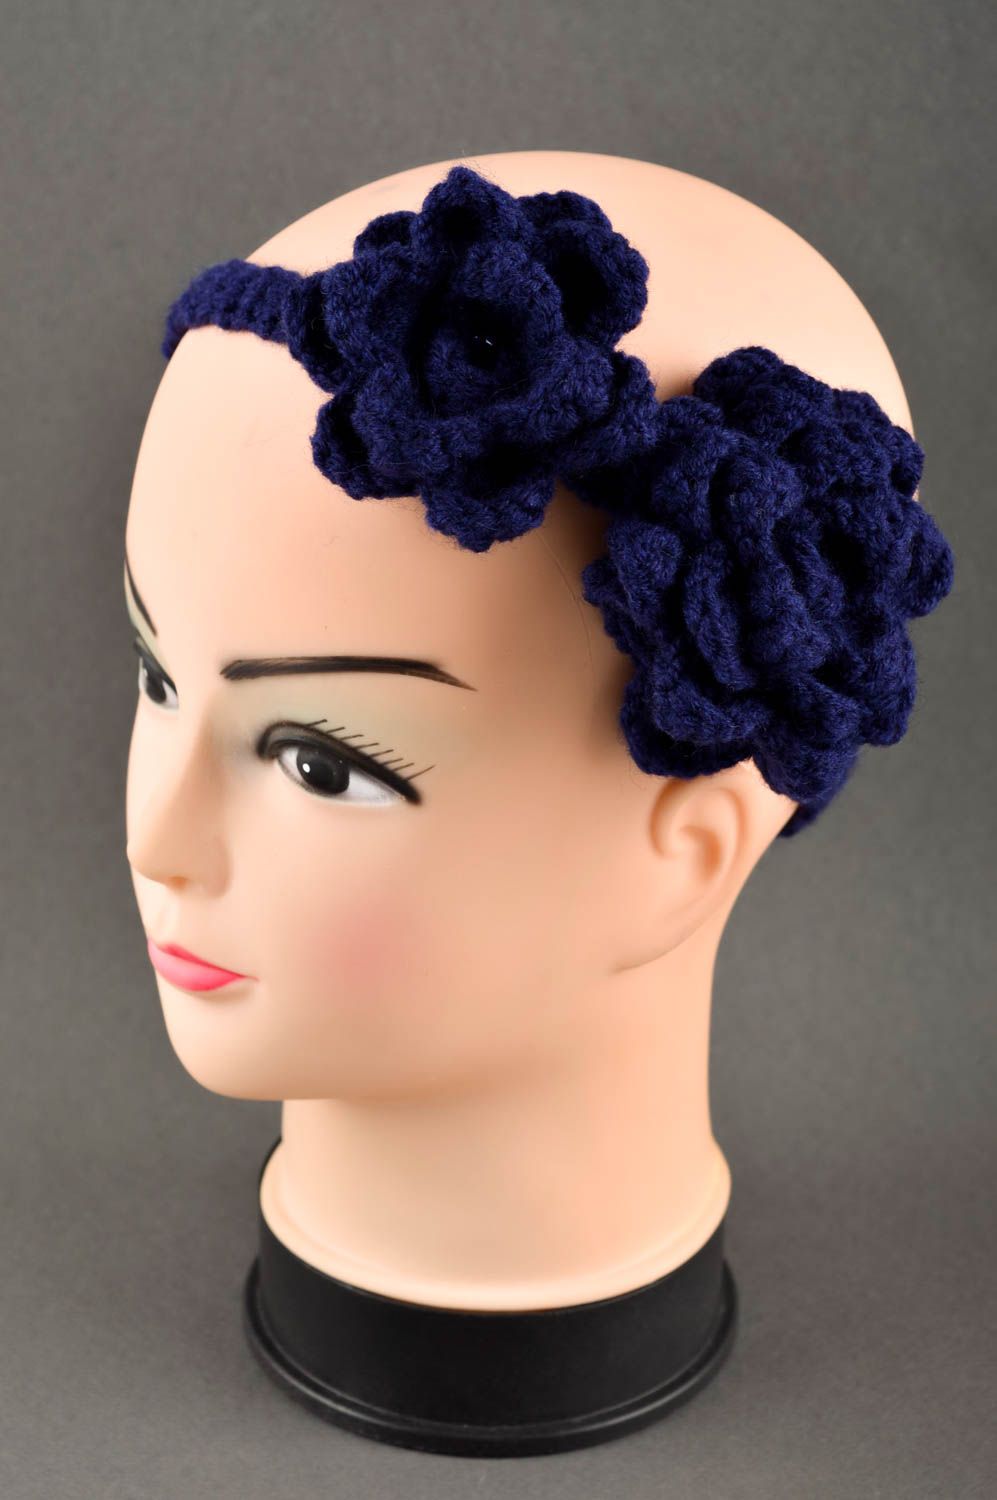 Handmade headband designer acessory gift ideas knitted hedband for girls photo 1